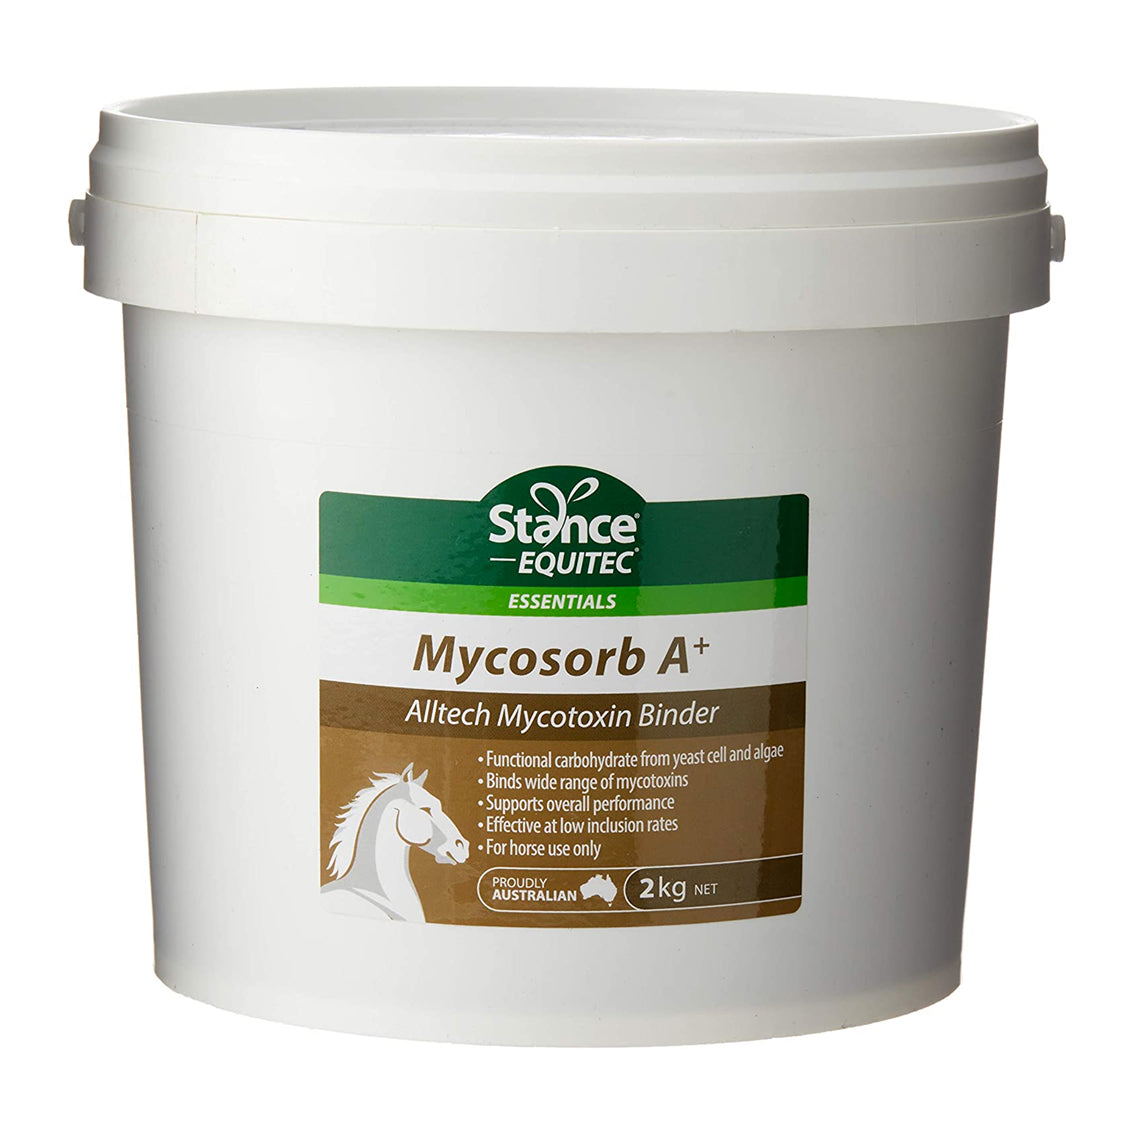 Stance Equitec Essentials Mycosorb A+ Alltech Mycotoxin Binder